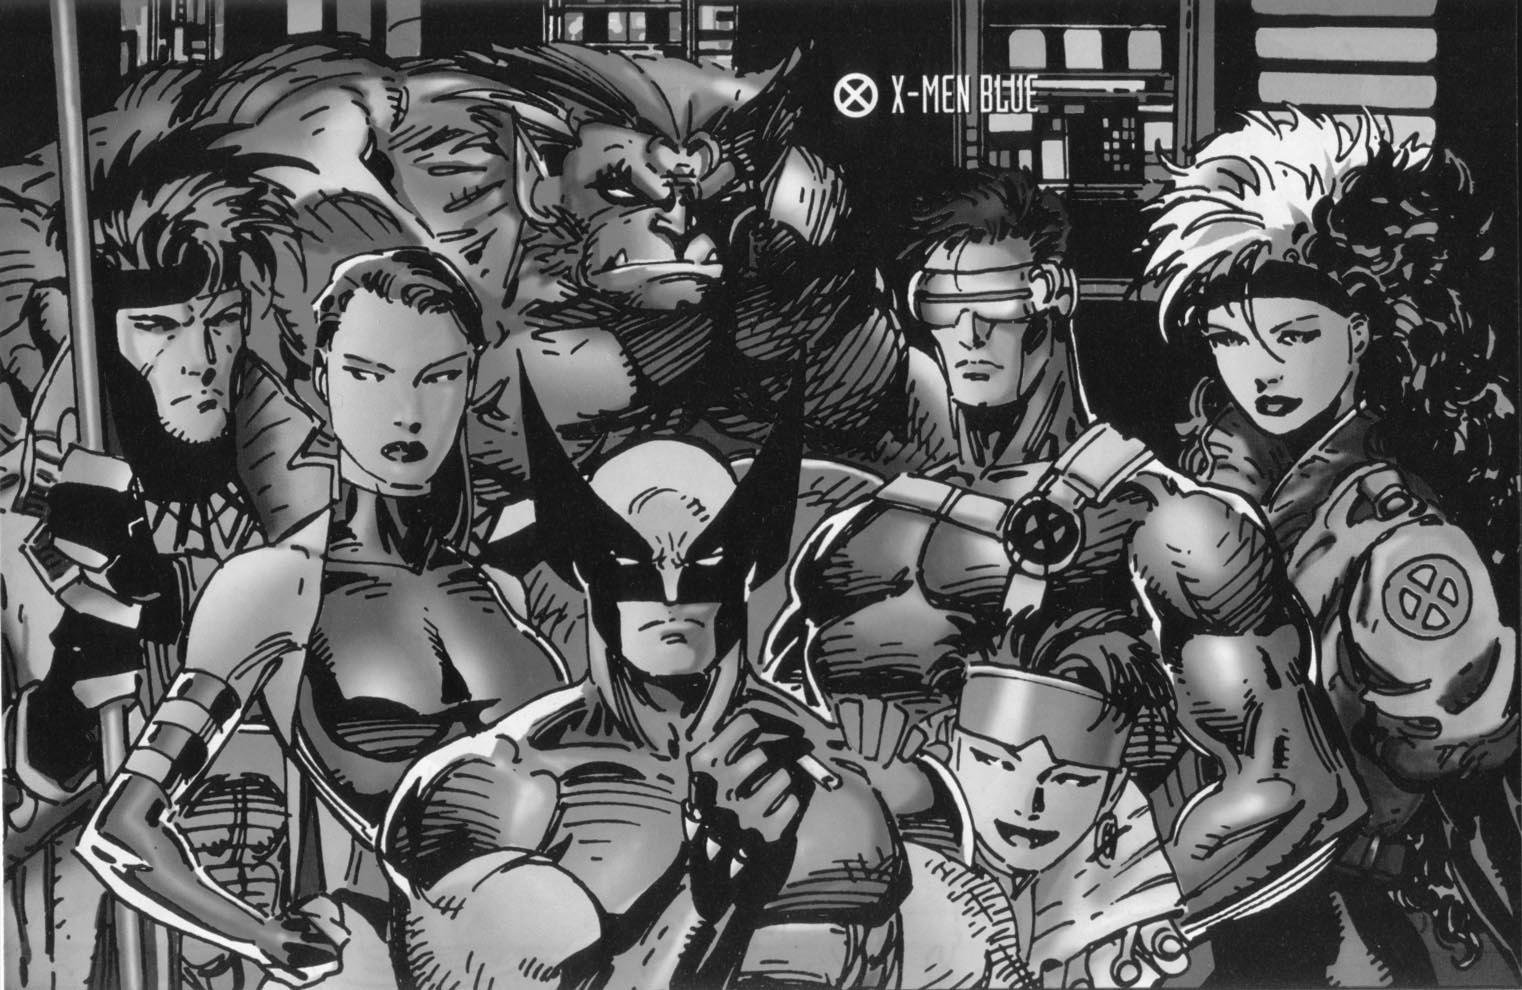 x men, Superhero, Marvel, Action, Adventure, Fantasy, Sci fi, Comics, Warrior, Xmen, Poster Wallpaper